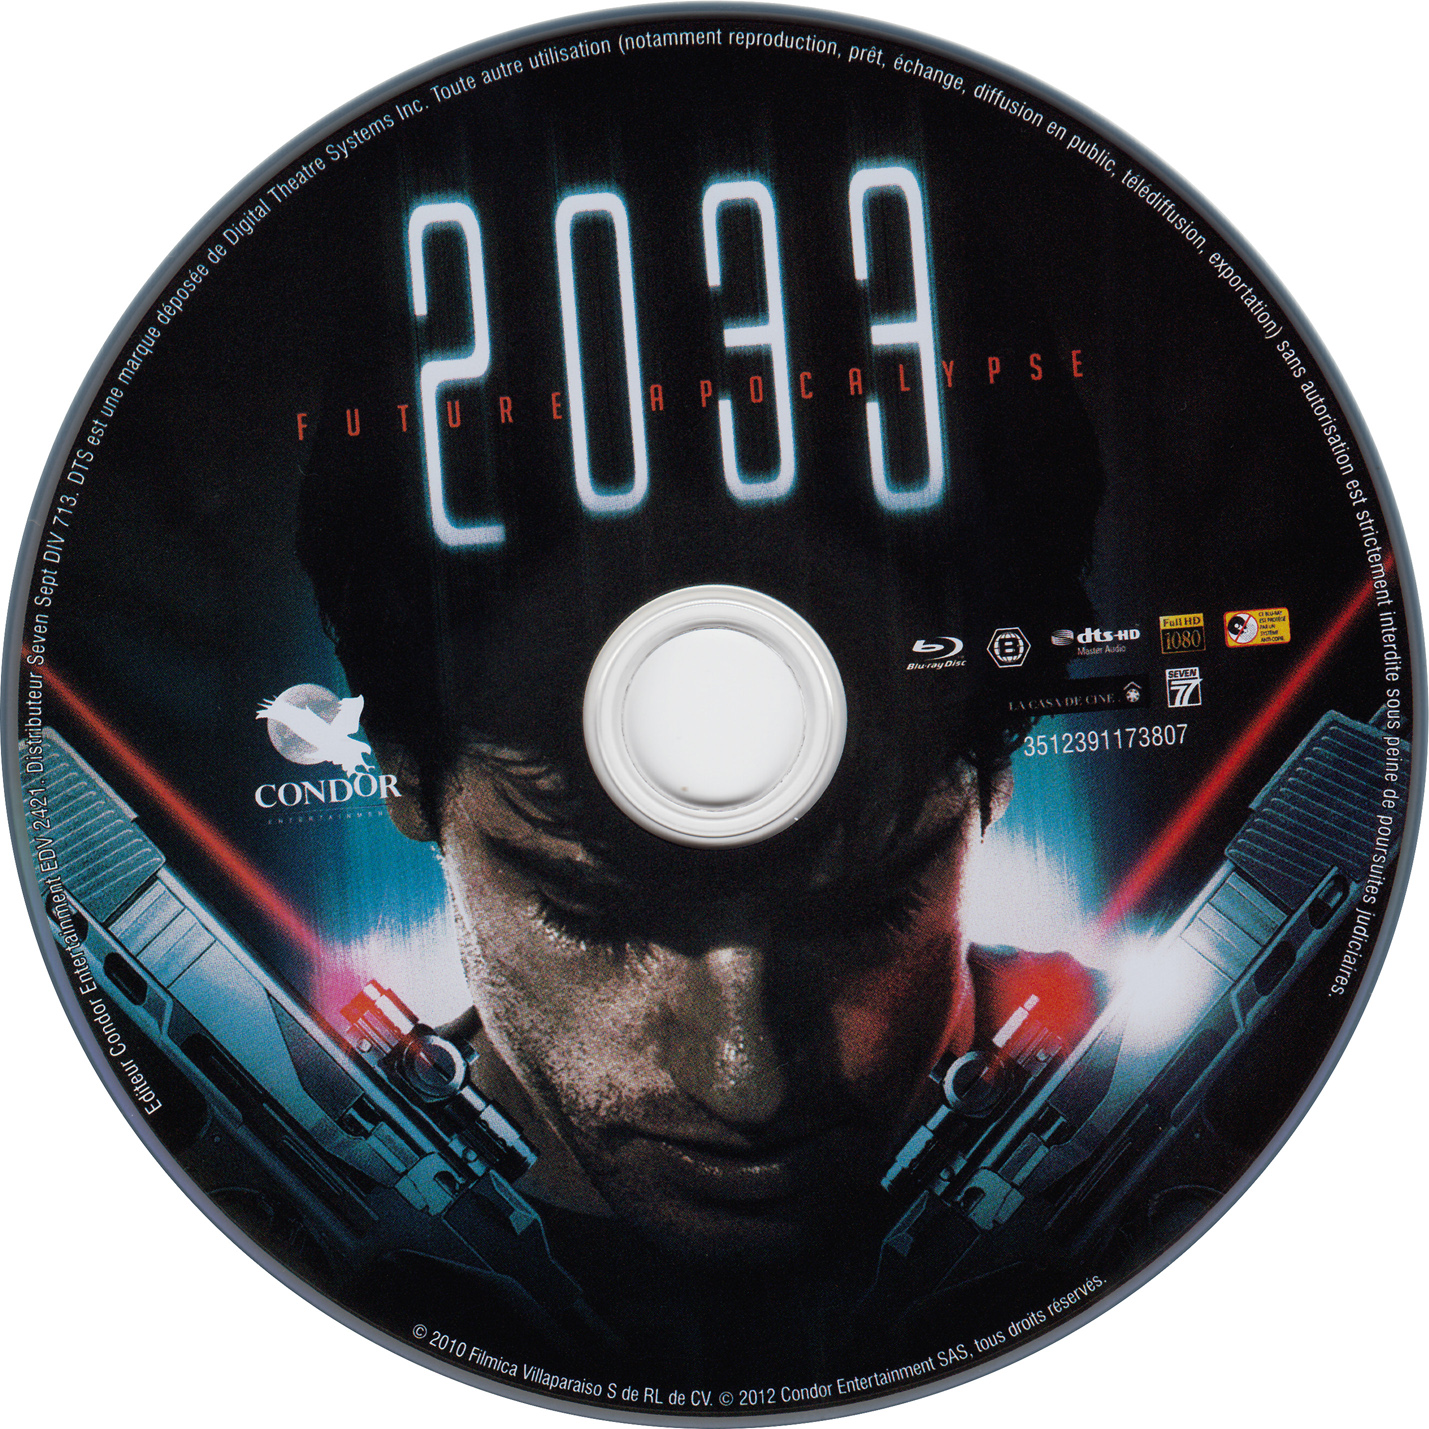 2033 (BLU-RAY)